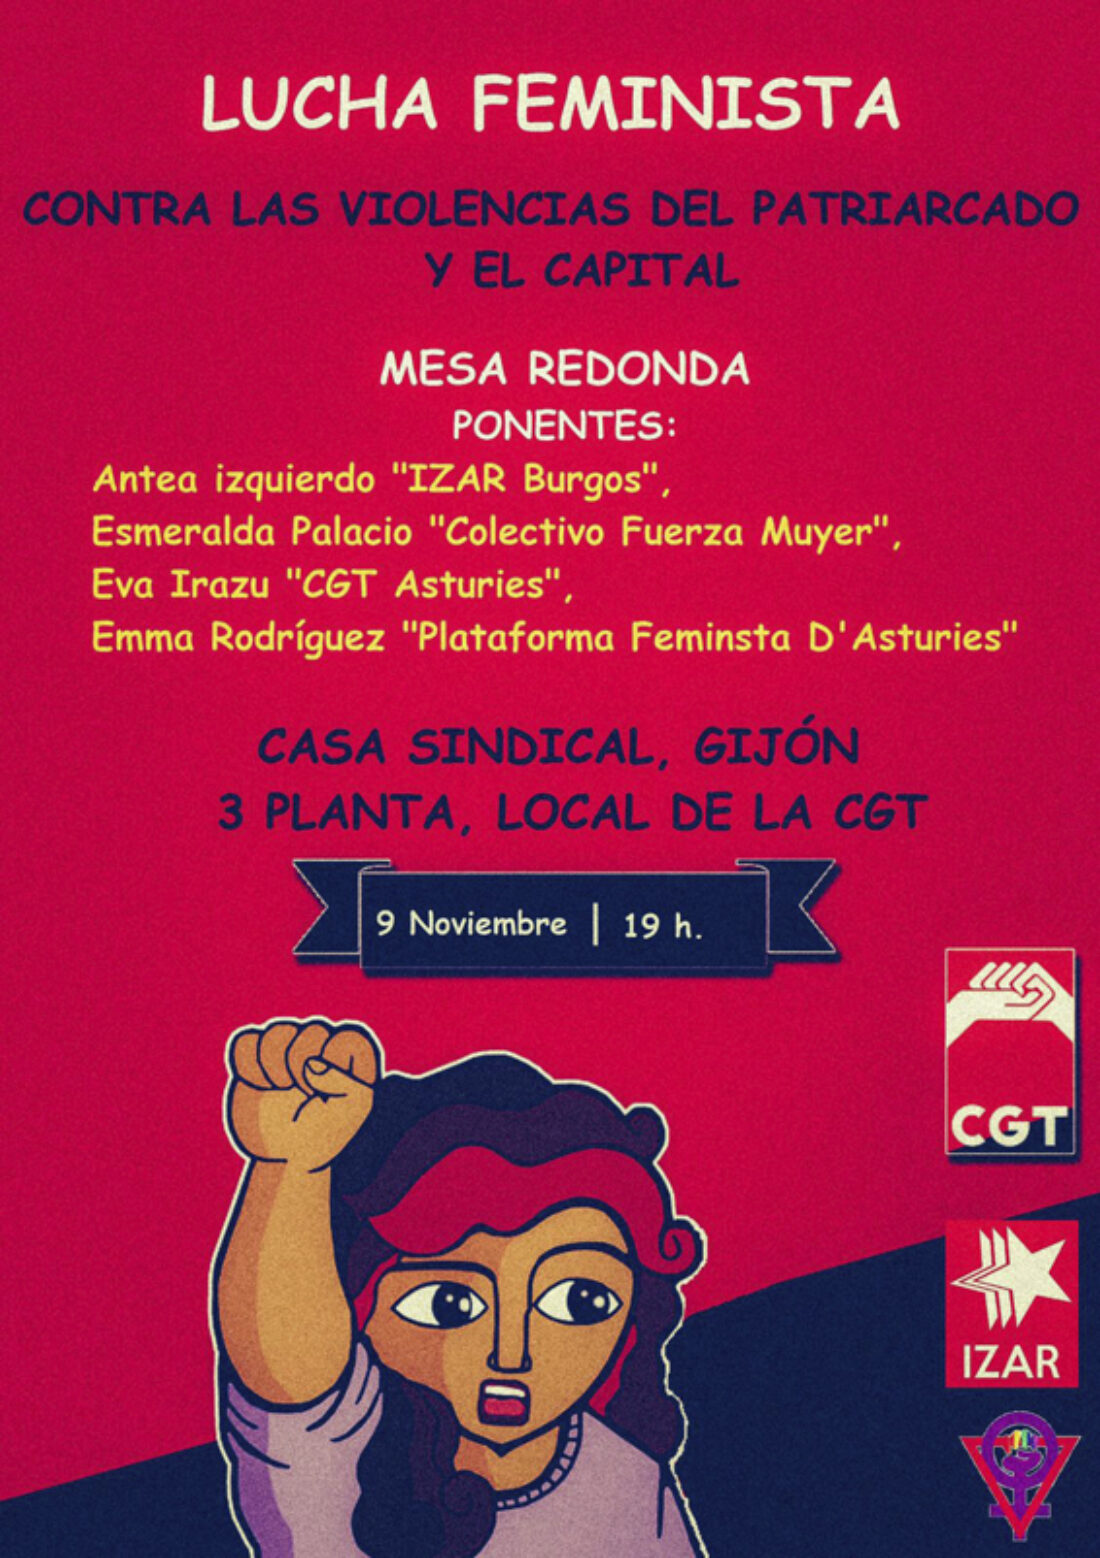 9-N: Lucha Feminista en CGT – Mesa redonda